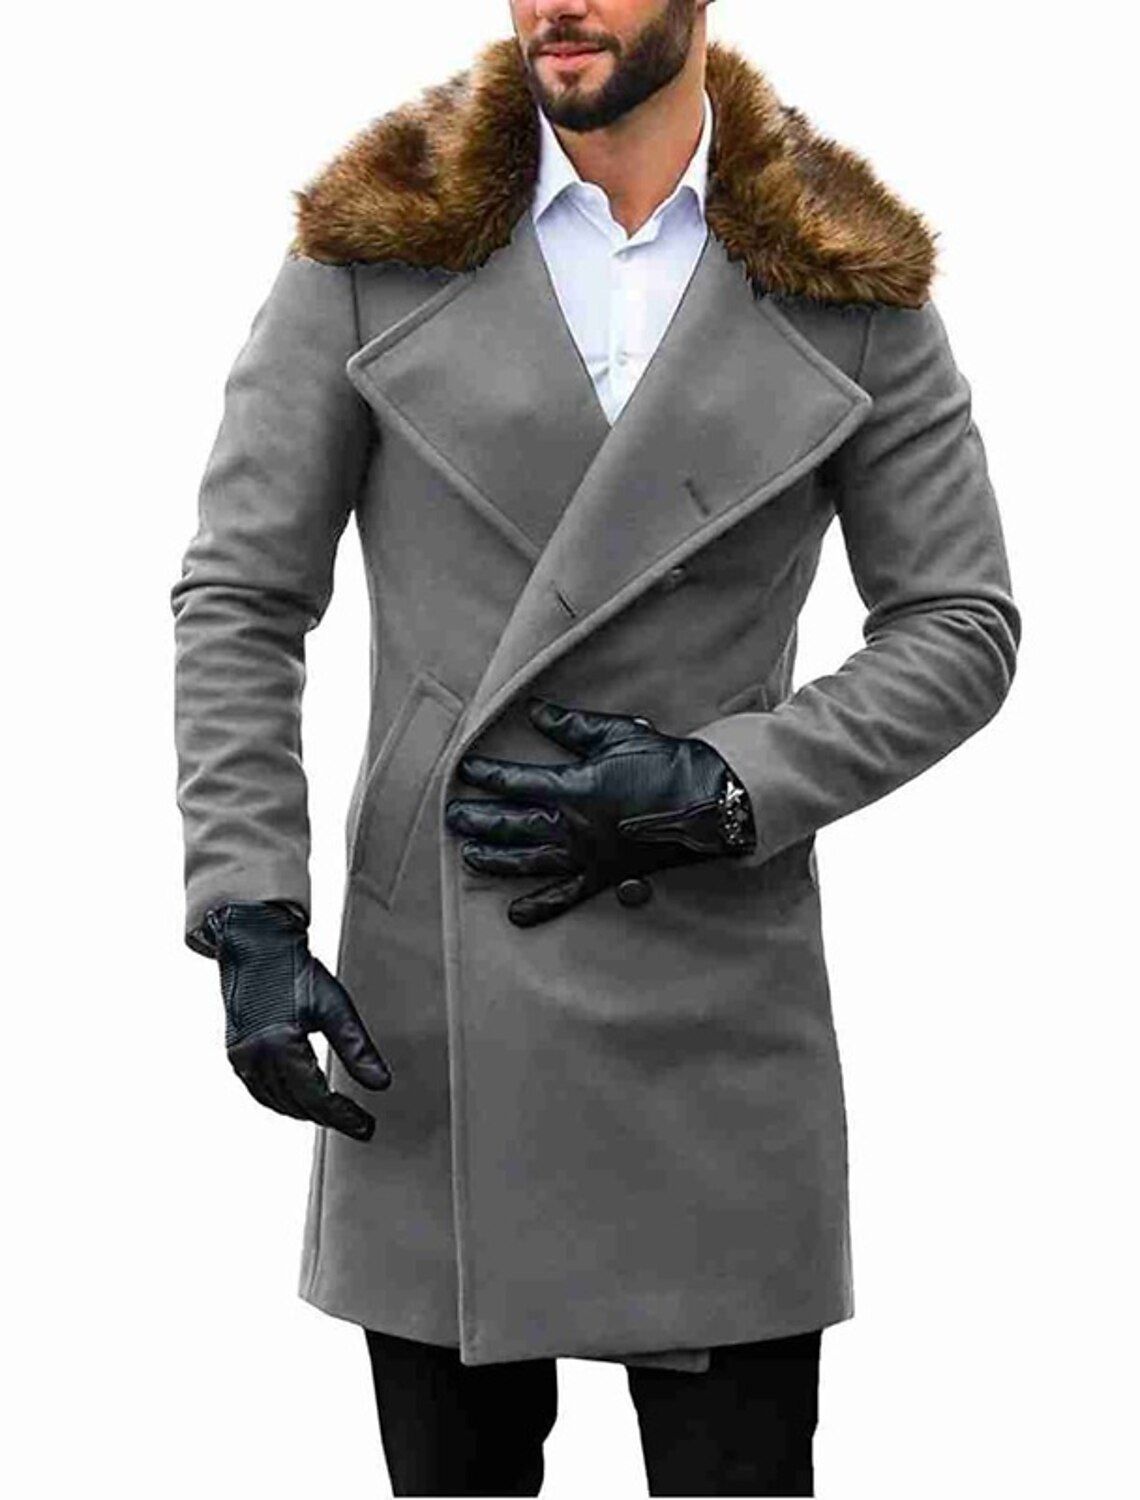 Women Tops Jacket Tailcoat Coat Casual Fashion Zipper Outwear Party Warm Print Winter